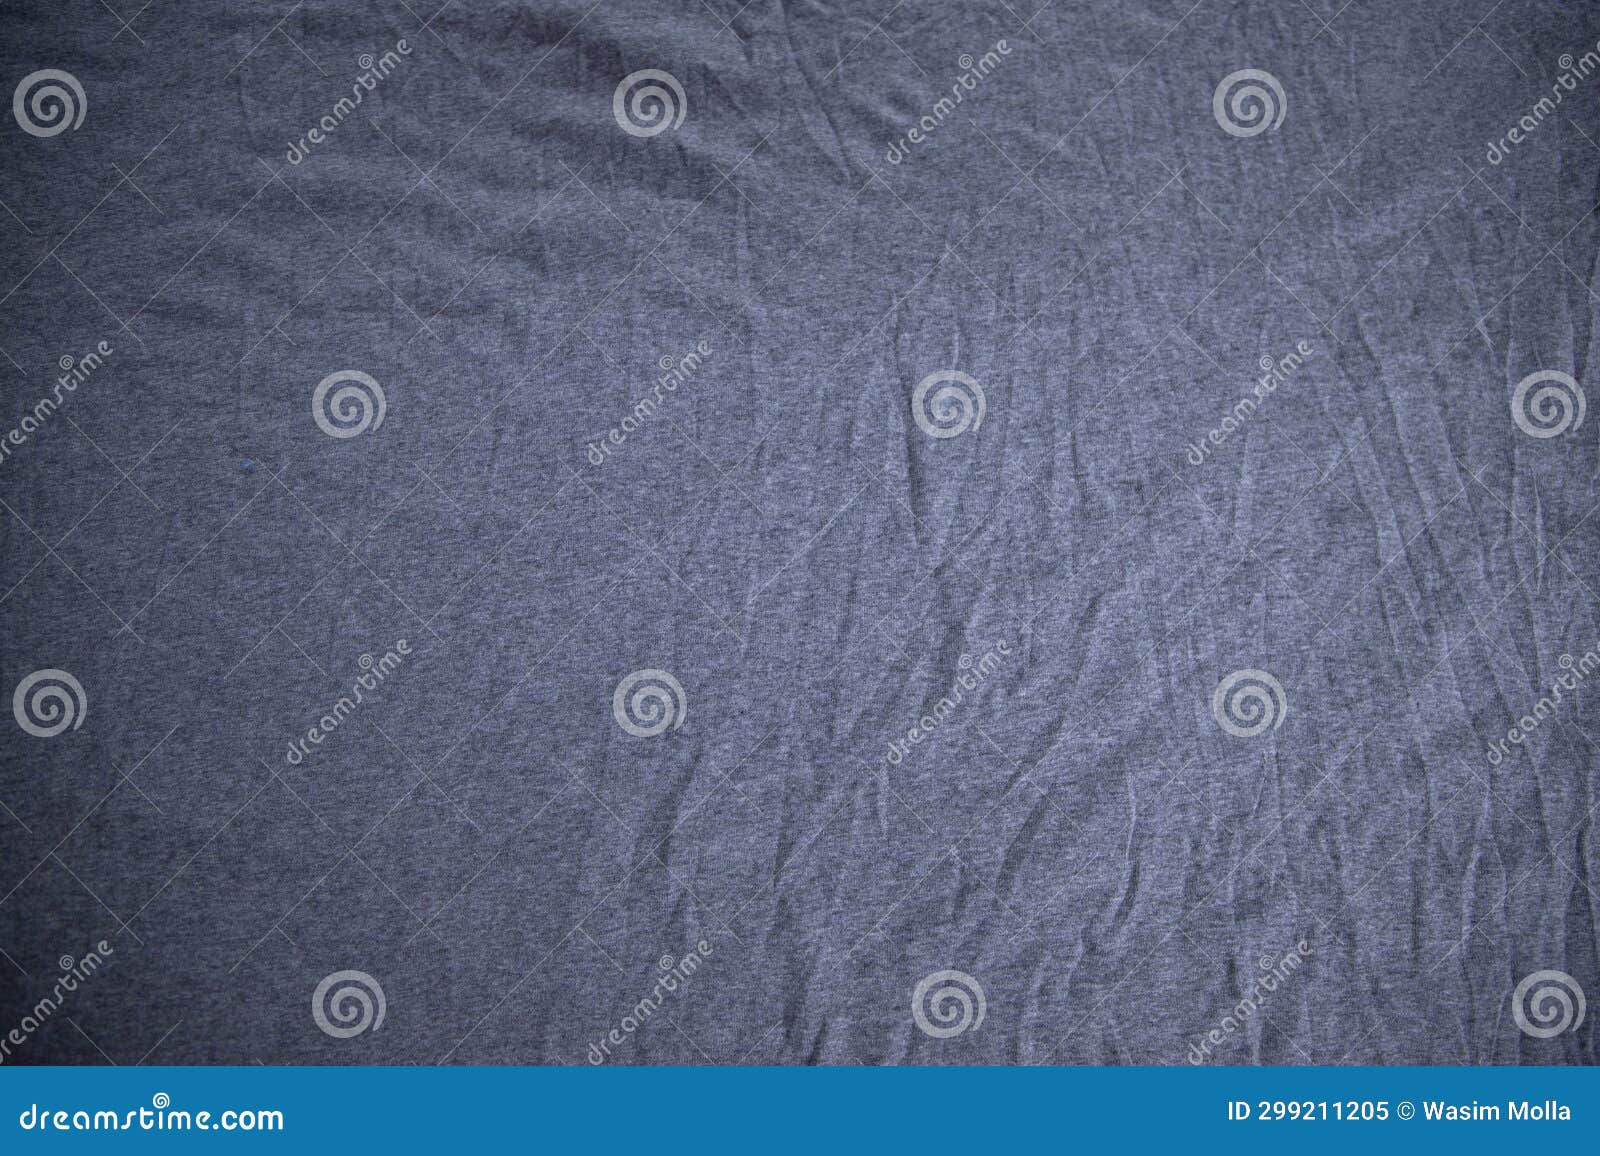 Gray Melange Fabric Surface Texture Background Stock Image - Image of ...